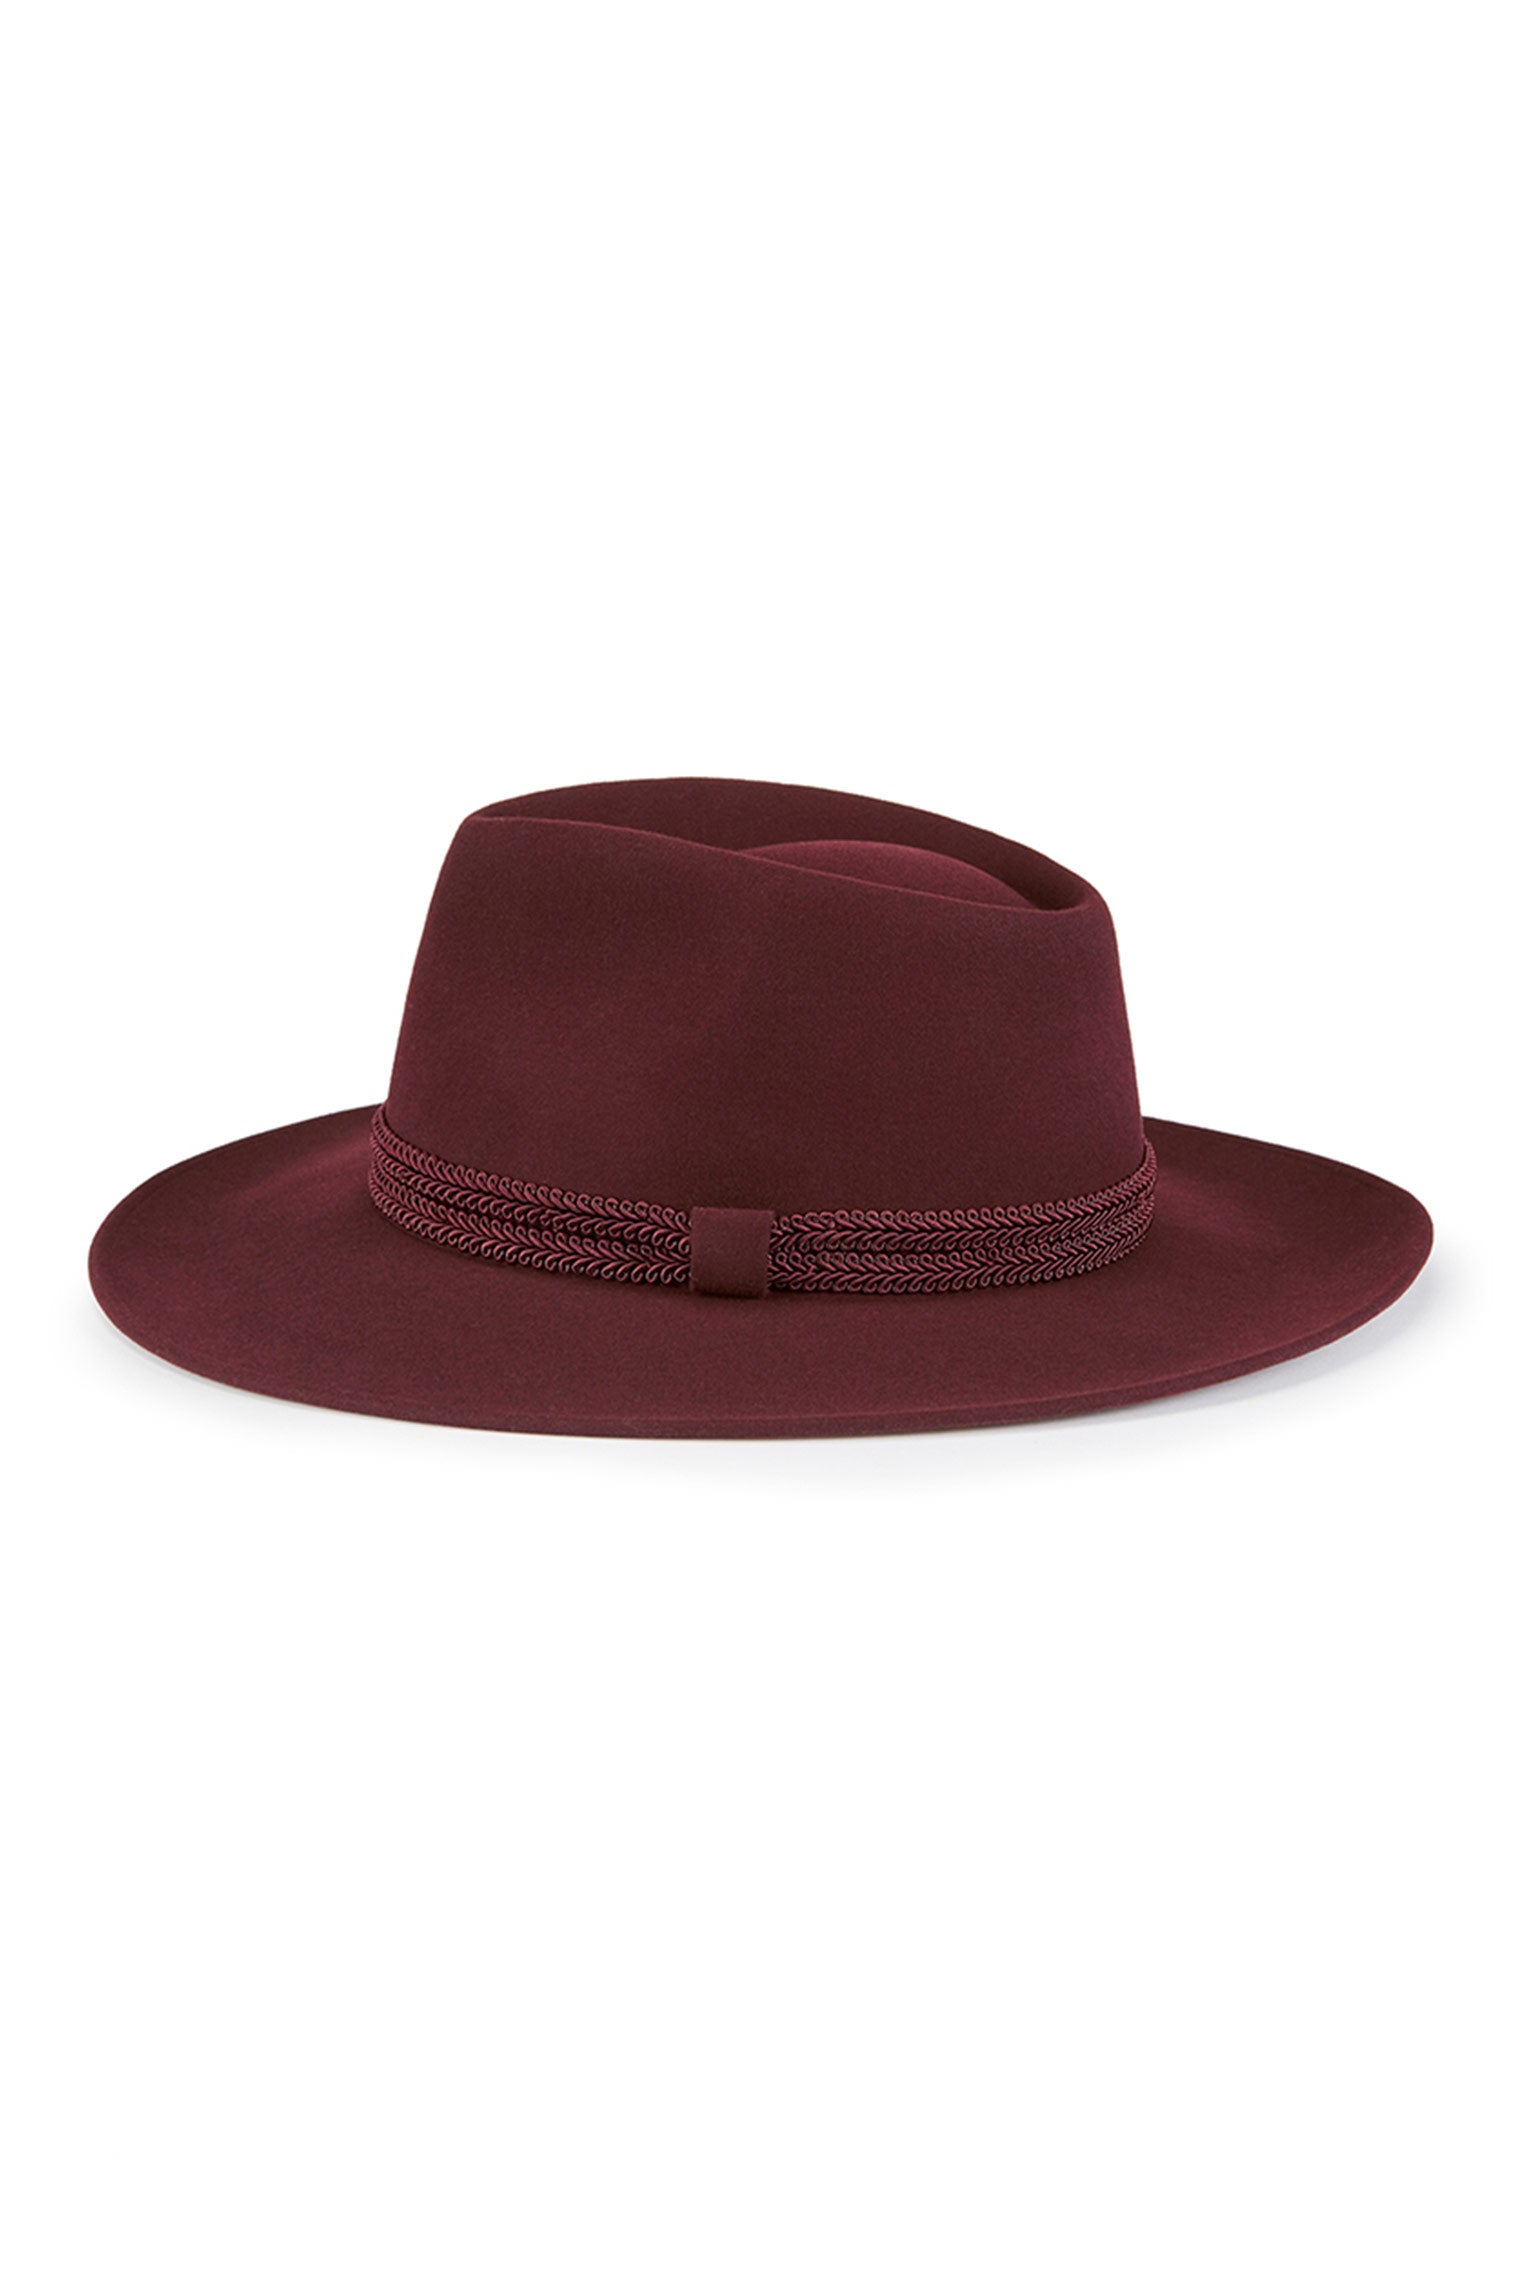 Escorial Wool Meredith Fedora - Women’s Hats - Lock & Co. Hatters London UK